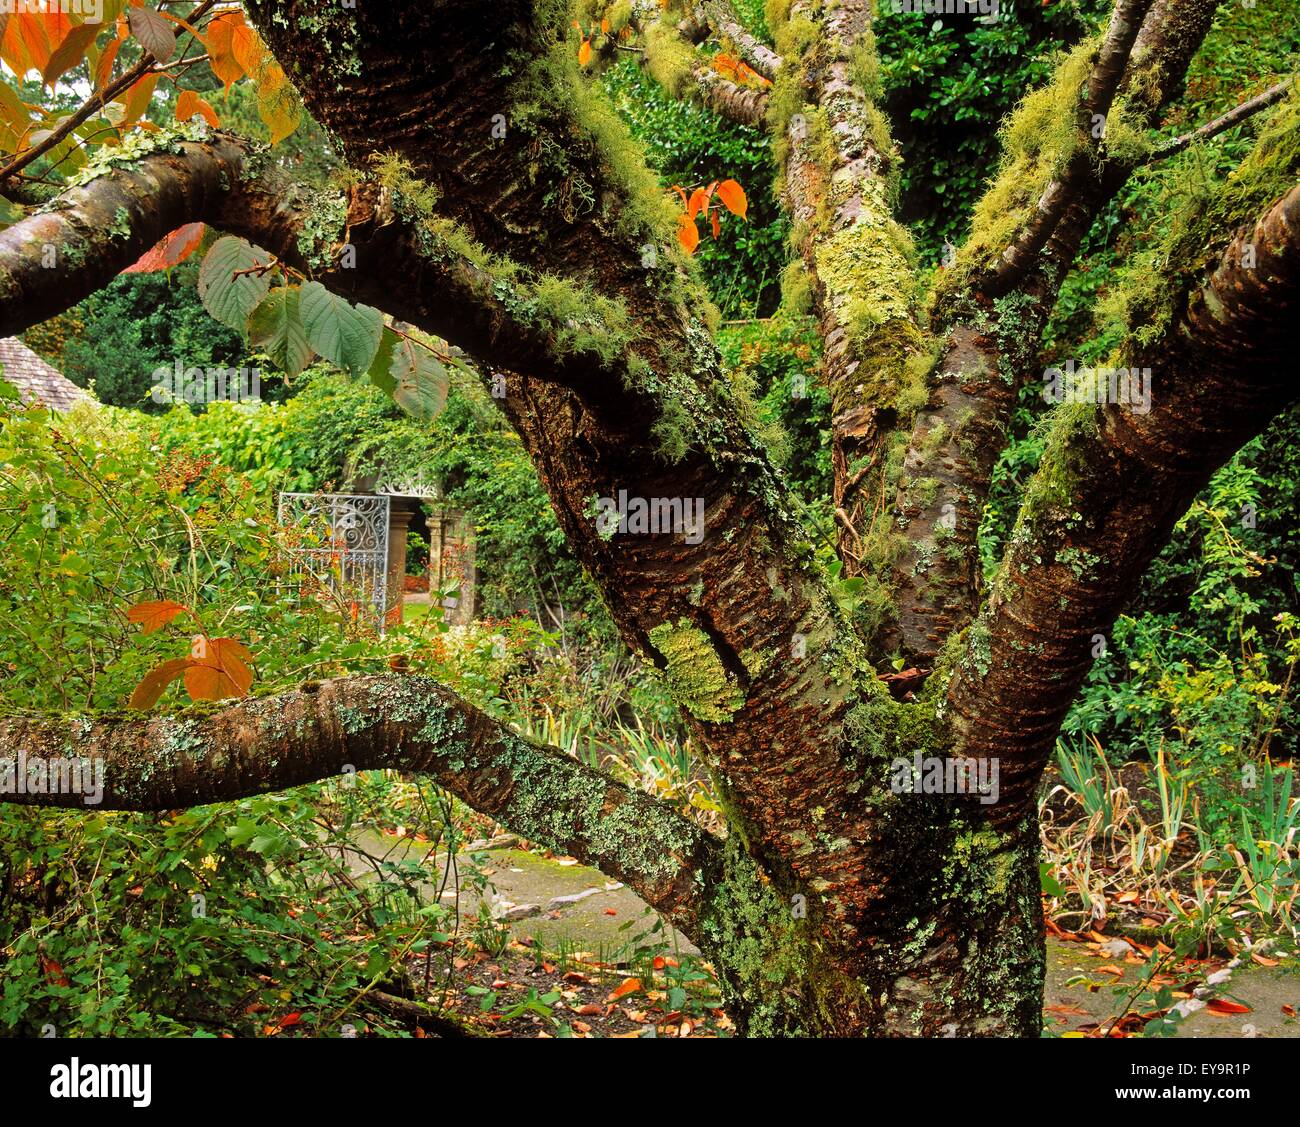 Lichen Covered Apple Tree, Walled Garden, Ilnacullin, Co Cork, Ireland Stock Photo